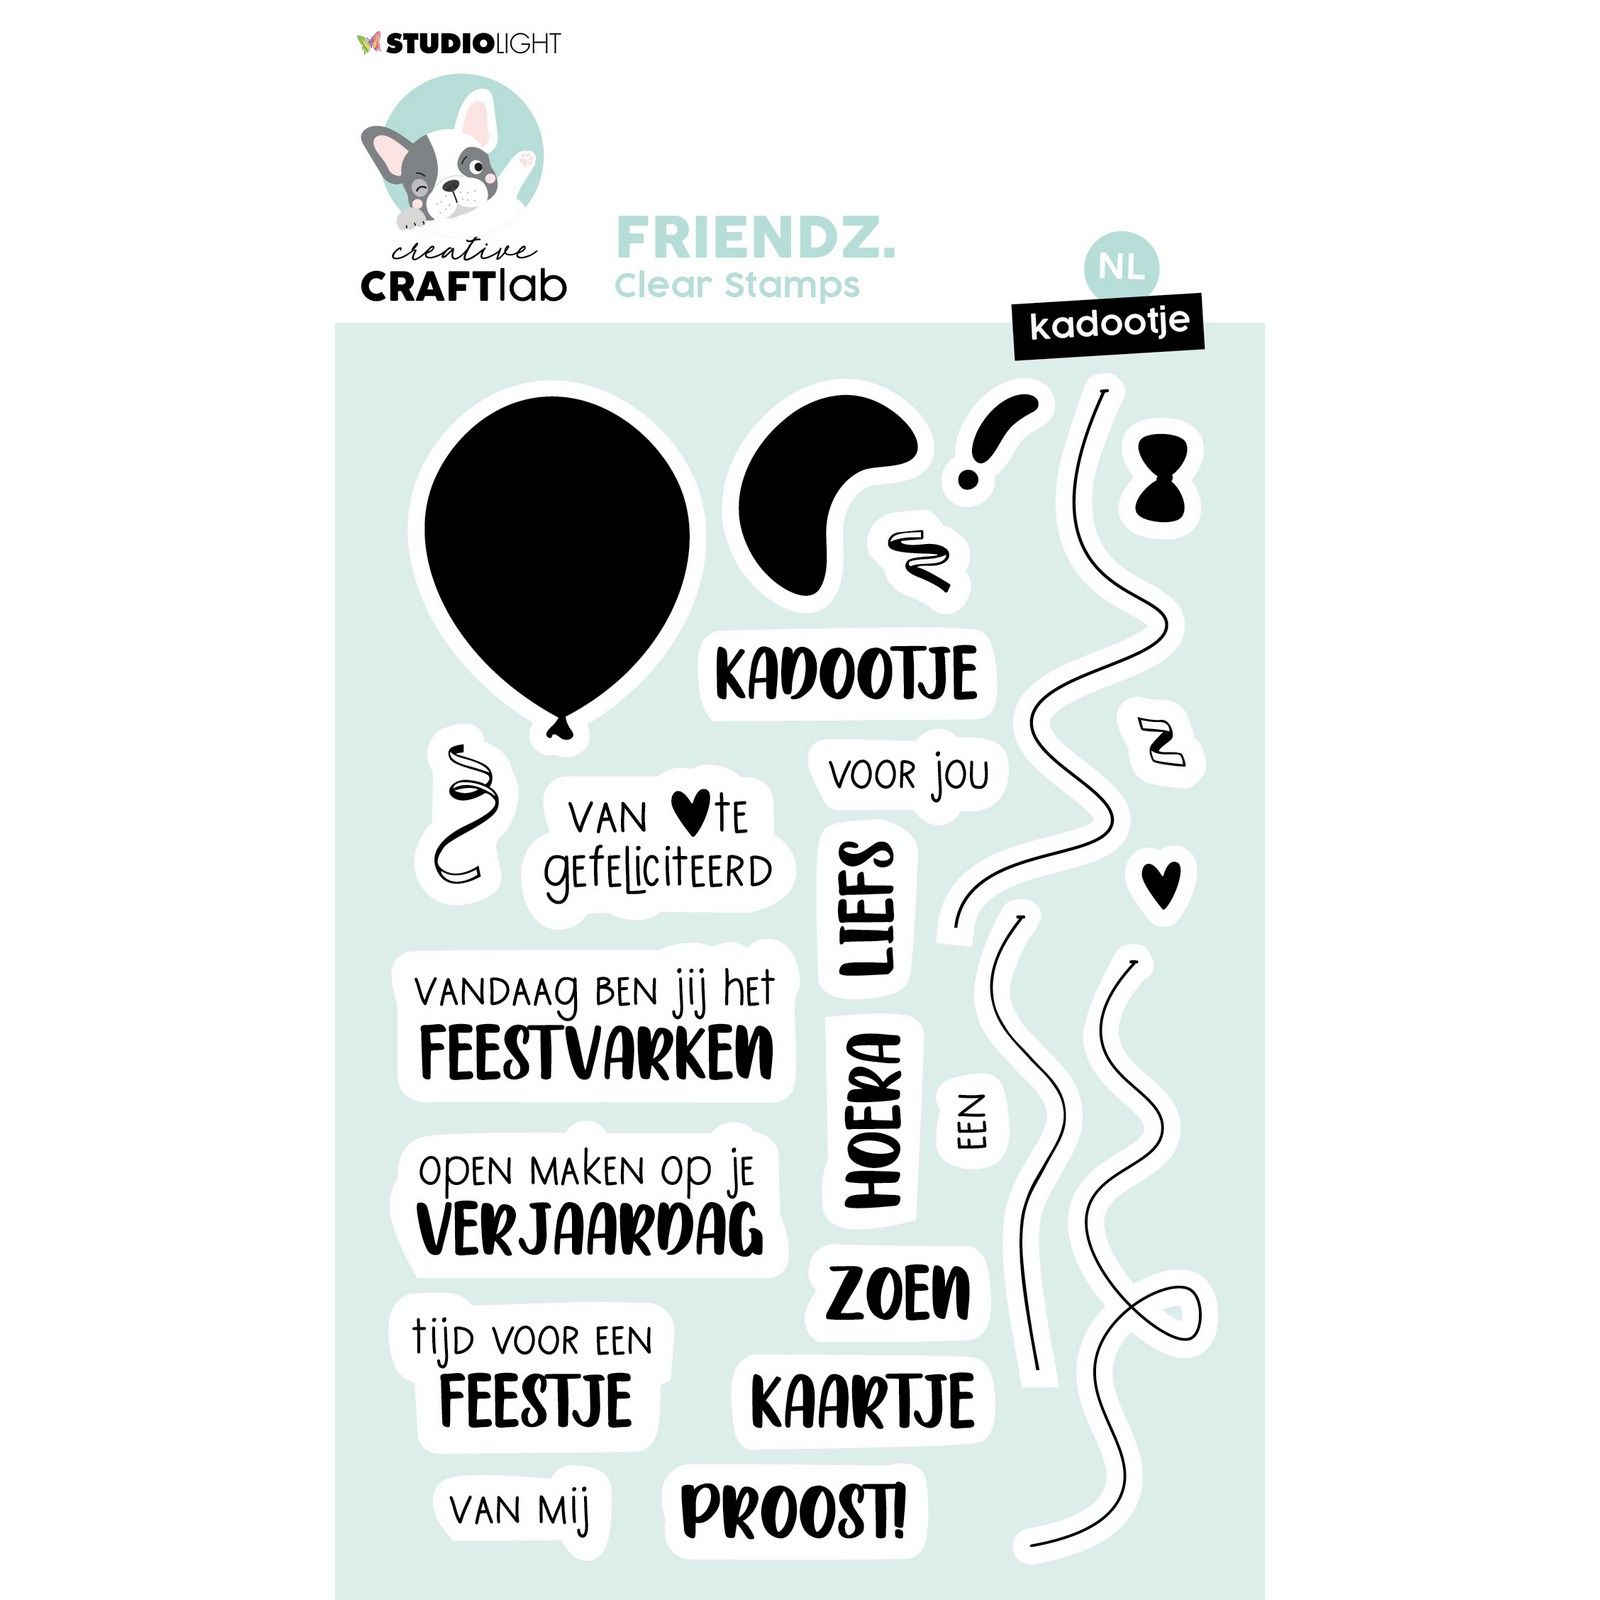 Creative Craftlab • Friendz Sello Transparente Dutch Text Kadootje